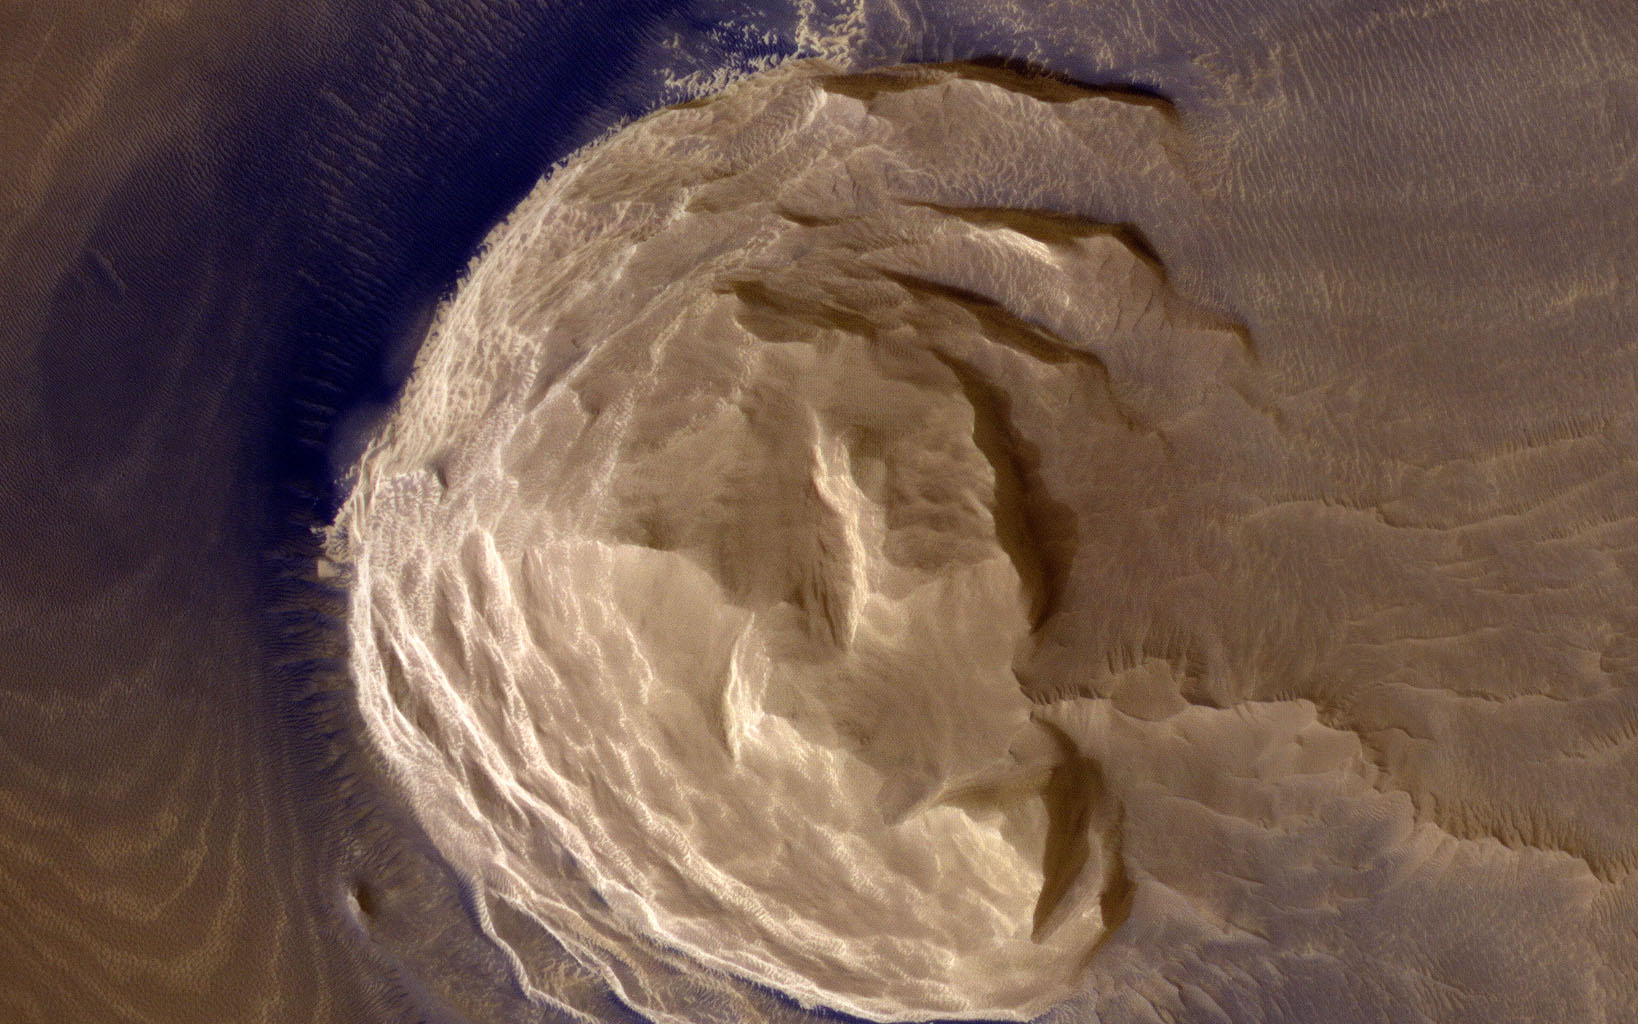 Dark Materials on Olympus Mons